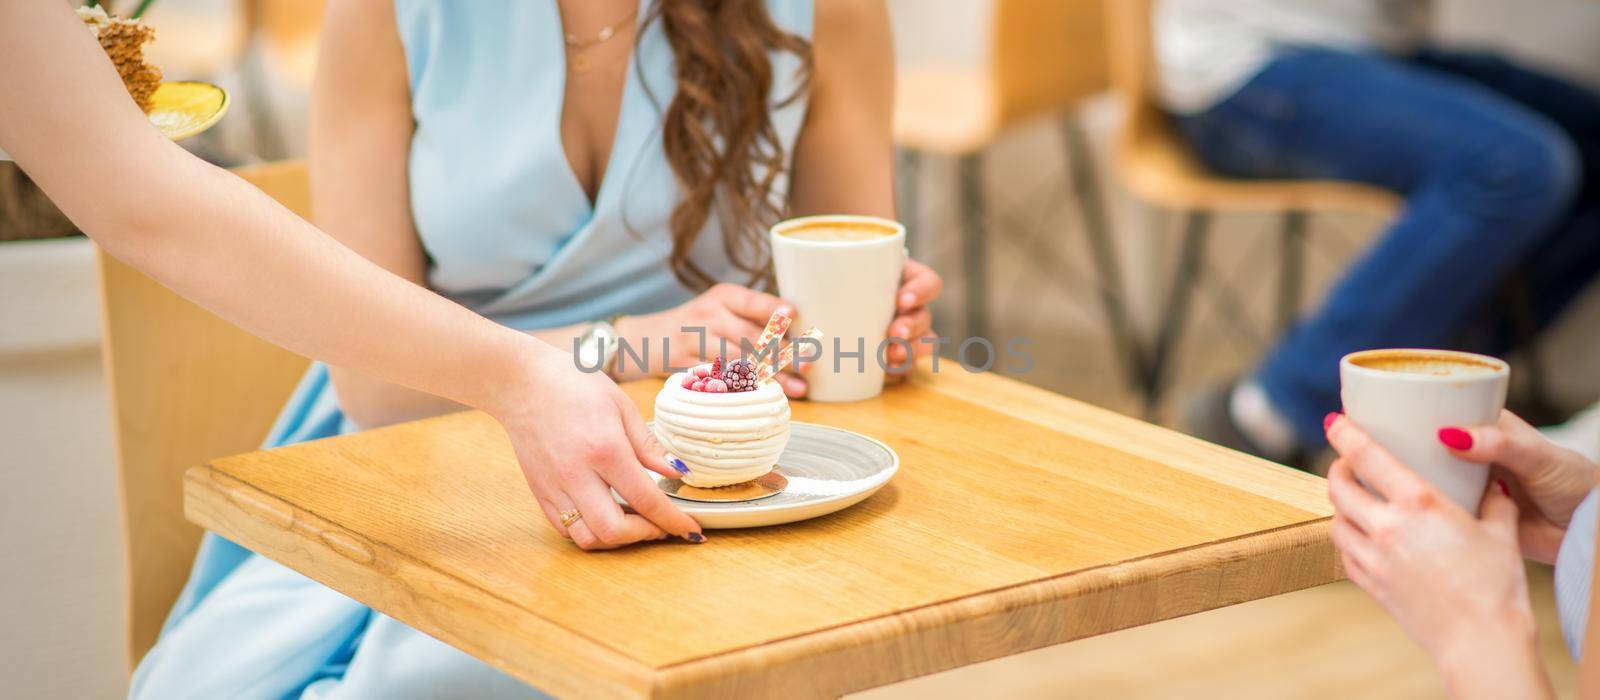 Waitress puts pastry on table by okskukuruza